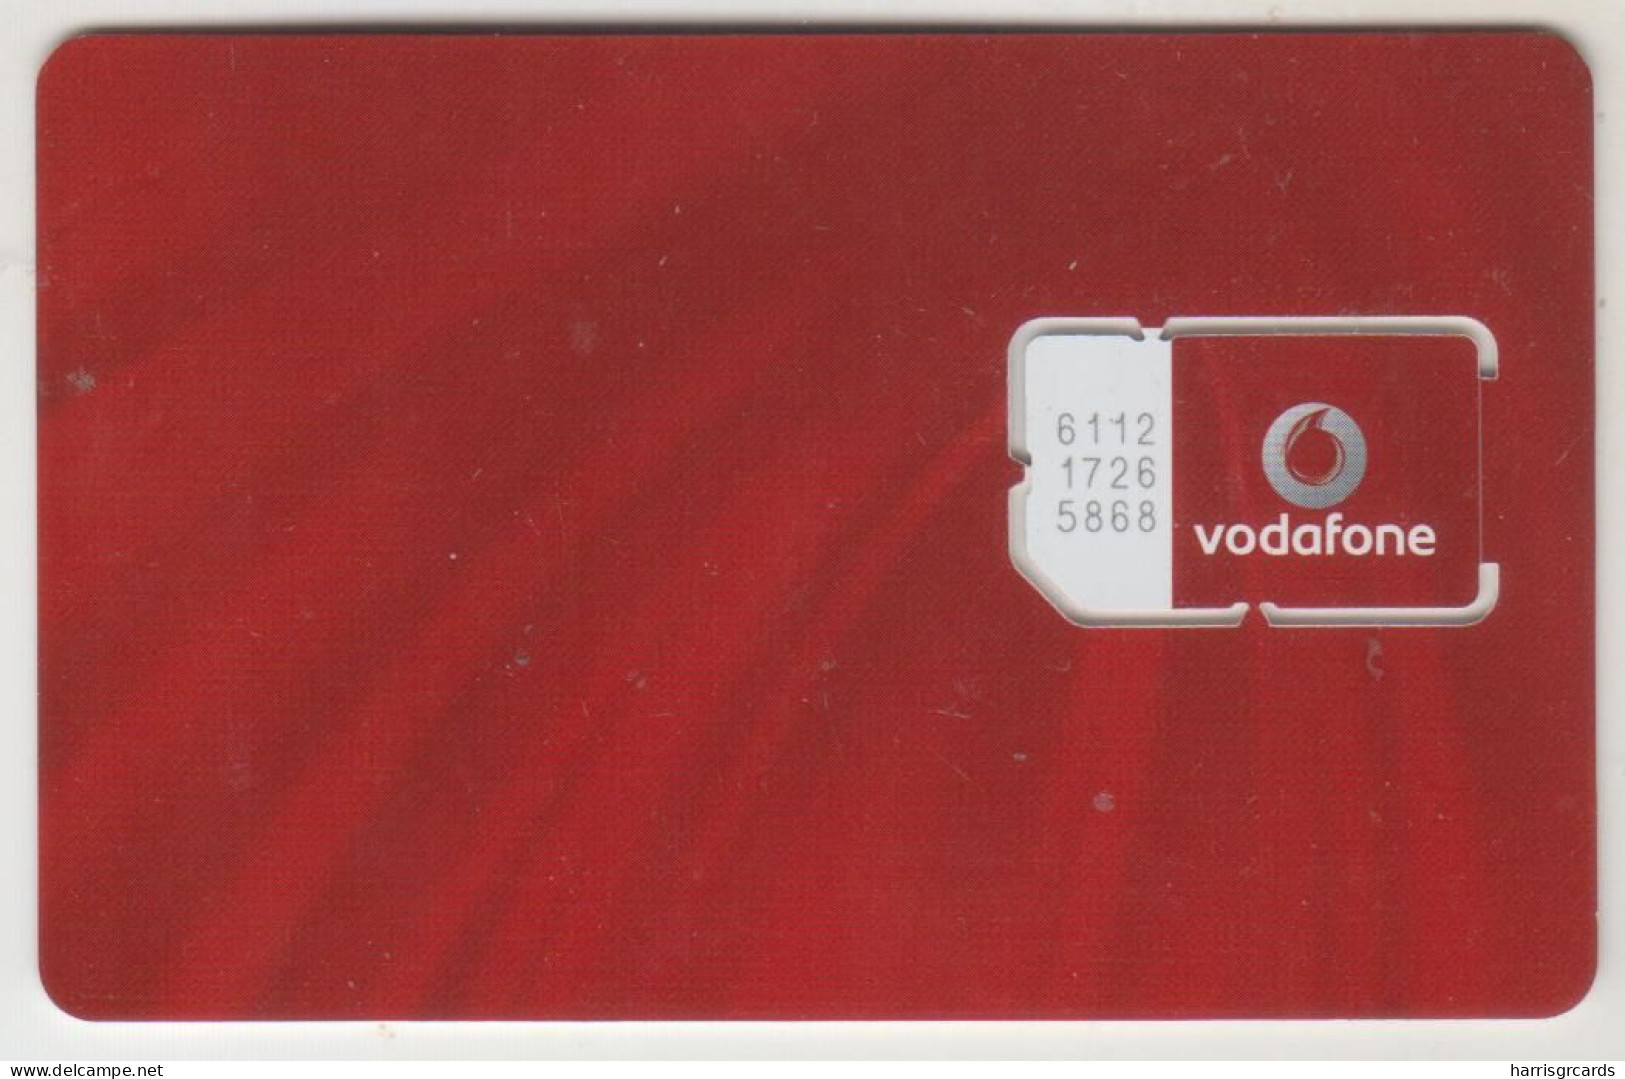 ROMANIA - Bun Venit, Vodafone GSM Card, Mint - Rumänien